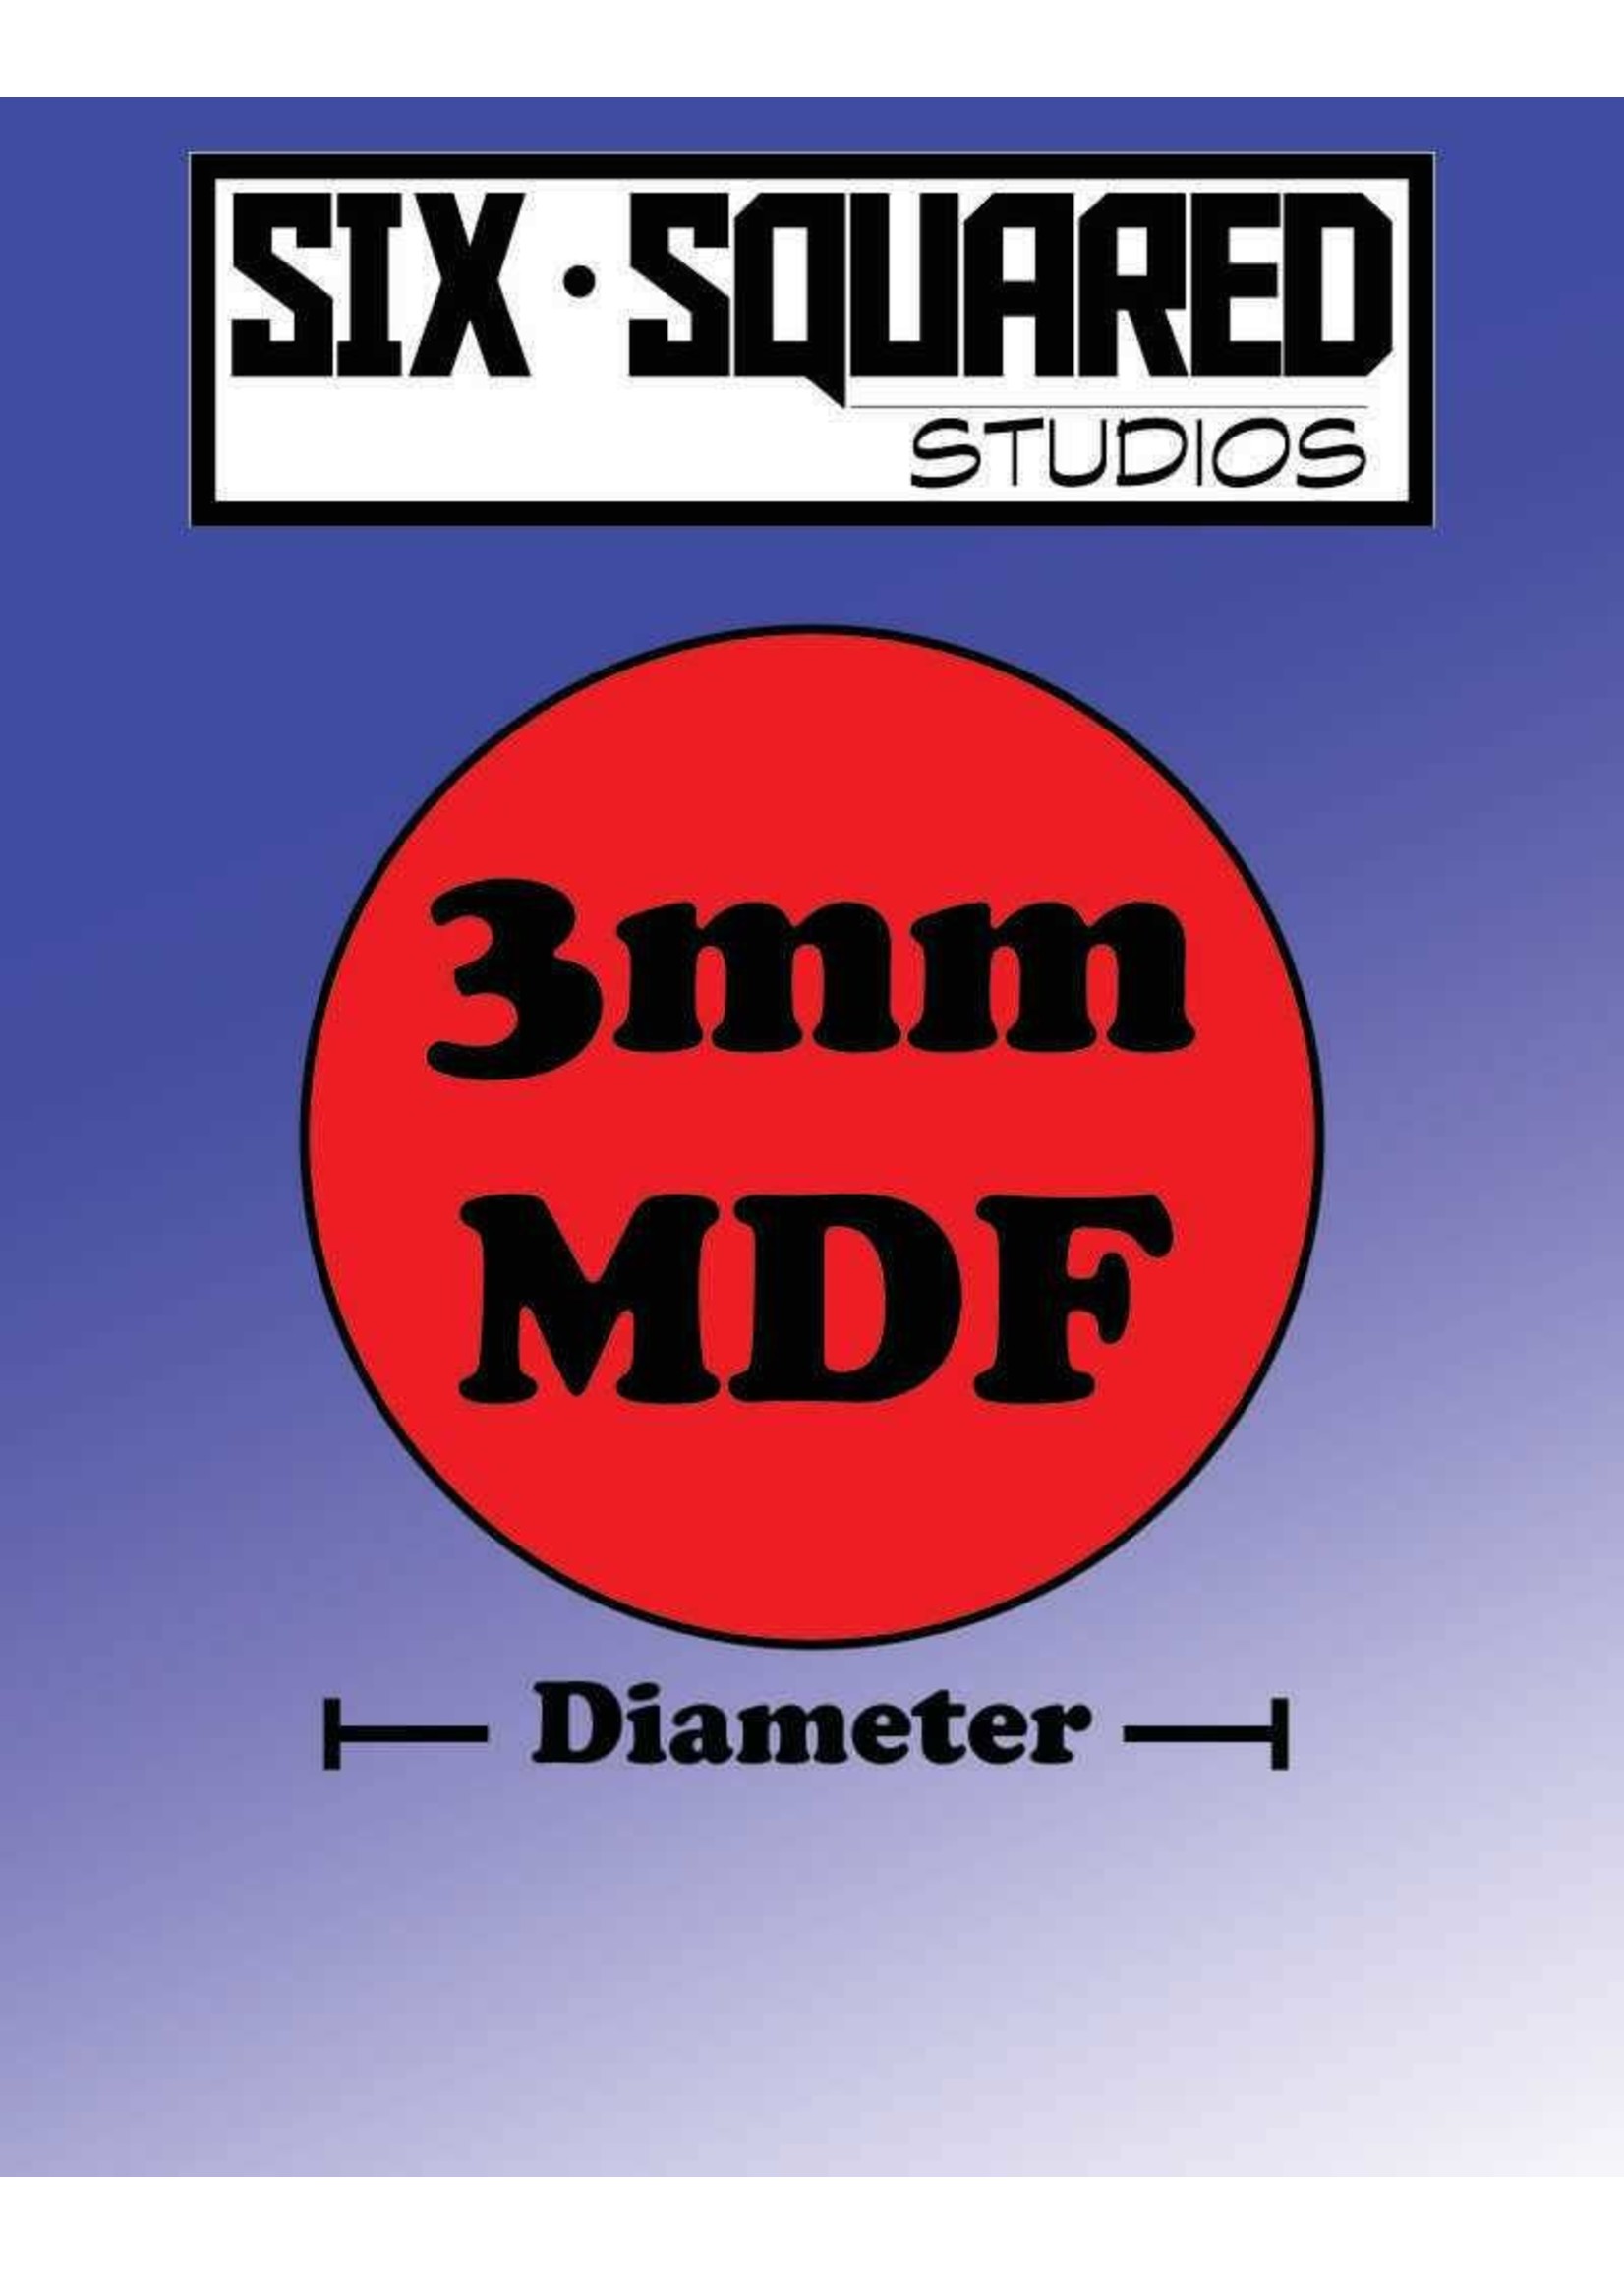 6 Squared Studios 120mm MDF round bases